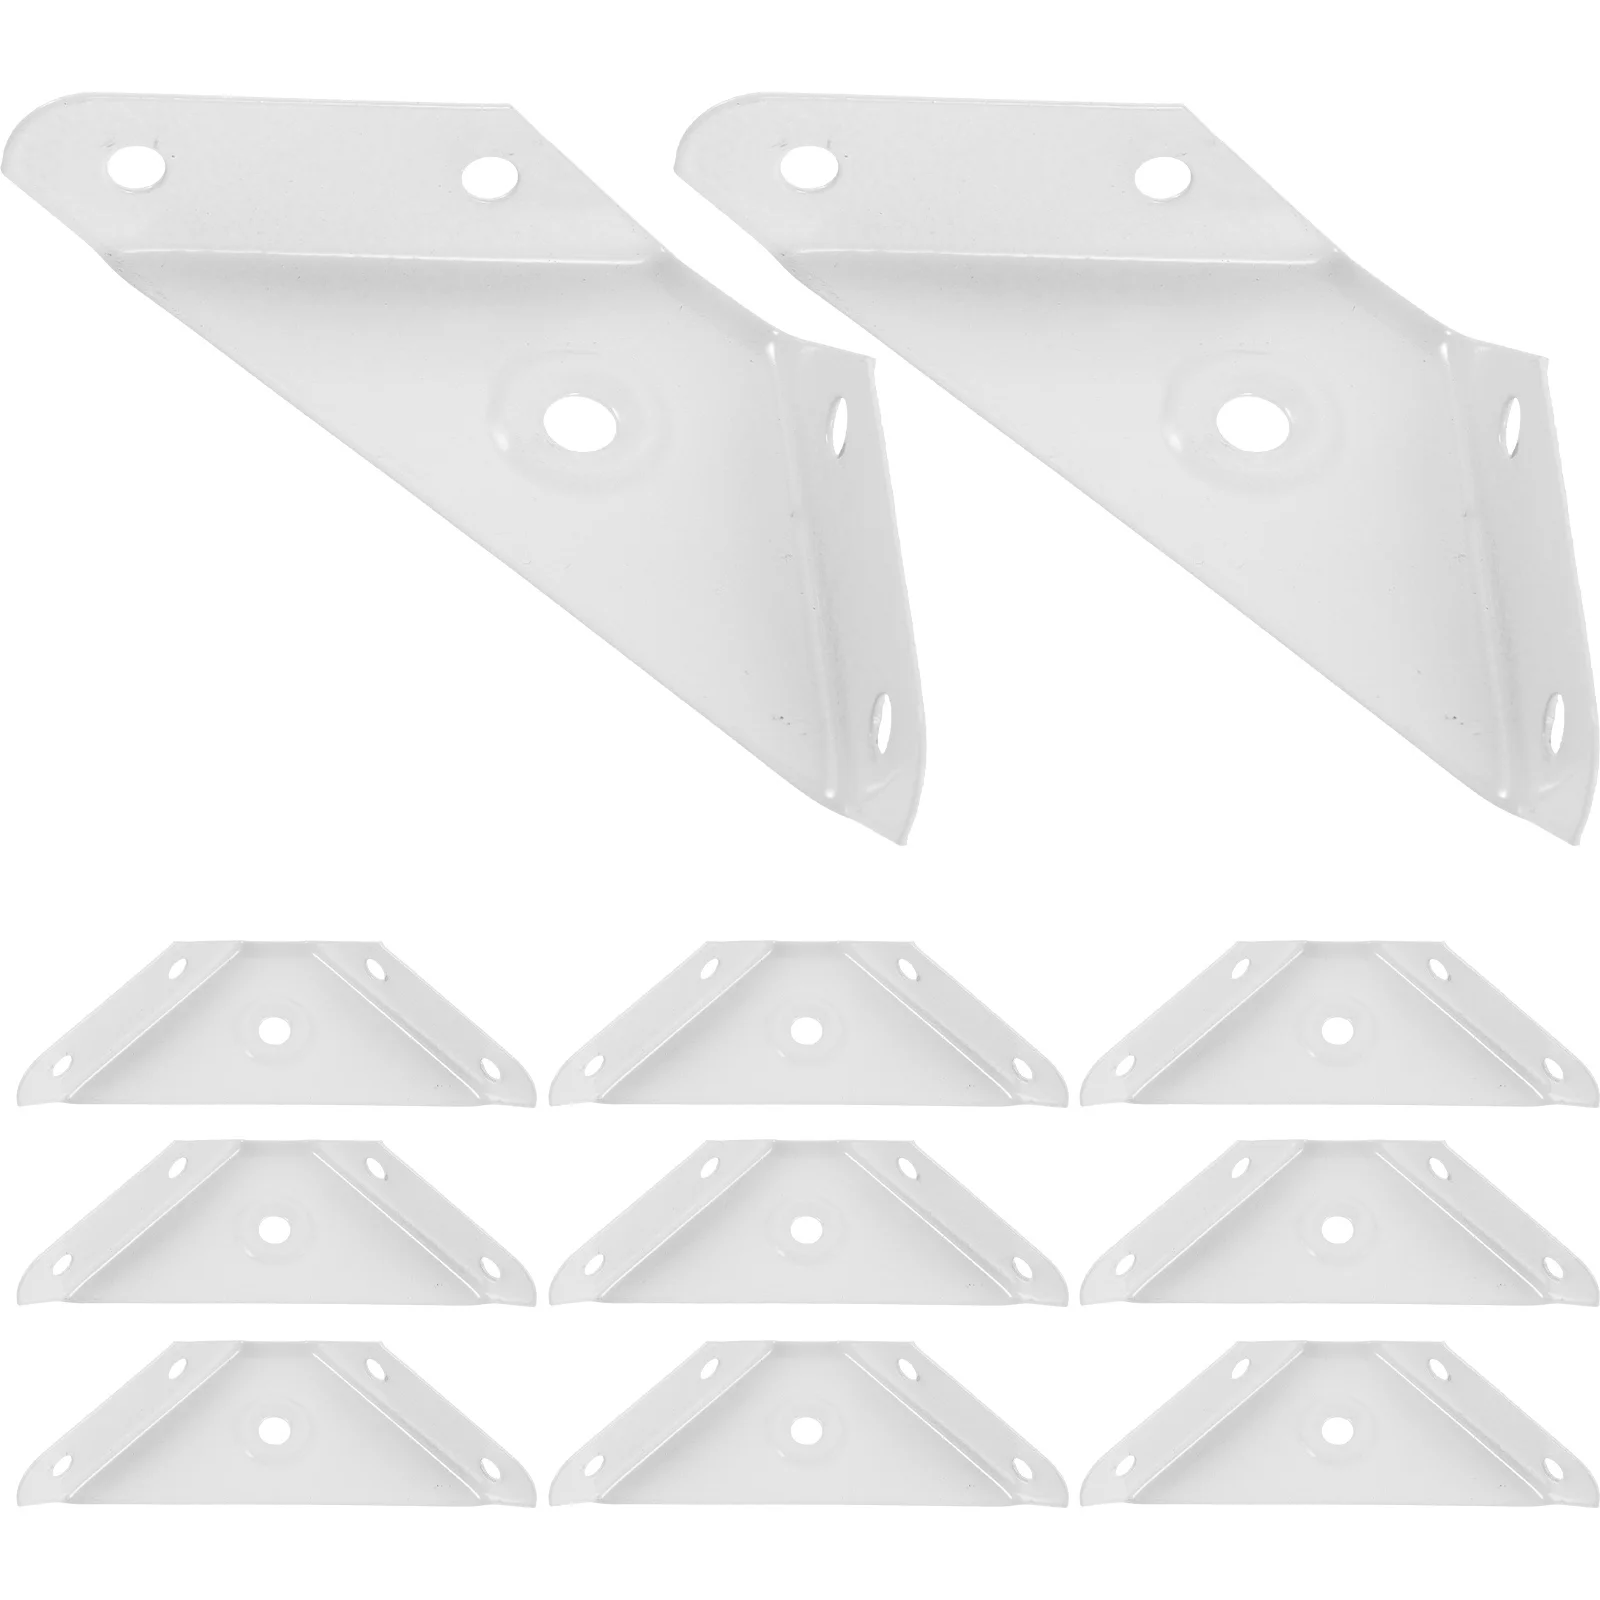 

12 Pcs Cabinet Corner Brace White Shelf Brackets Braces Wood Hardware Accessories Shelves Steel Angle